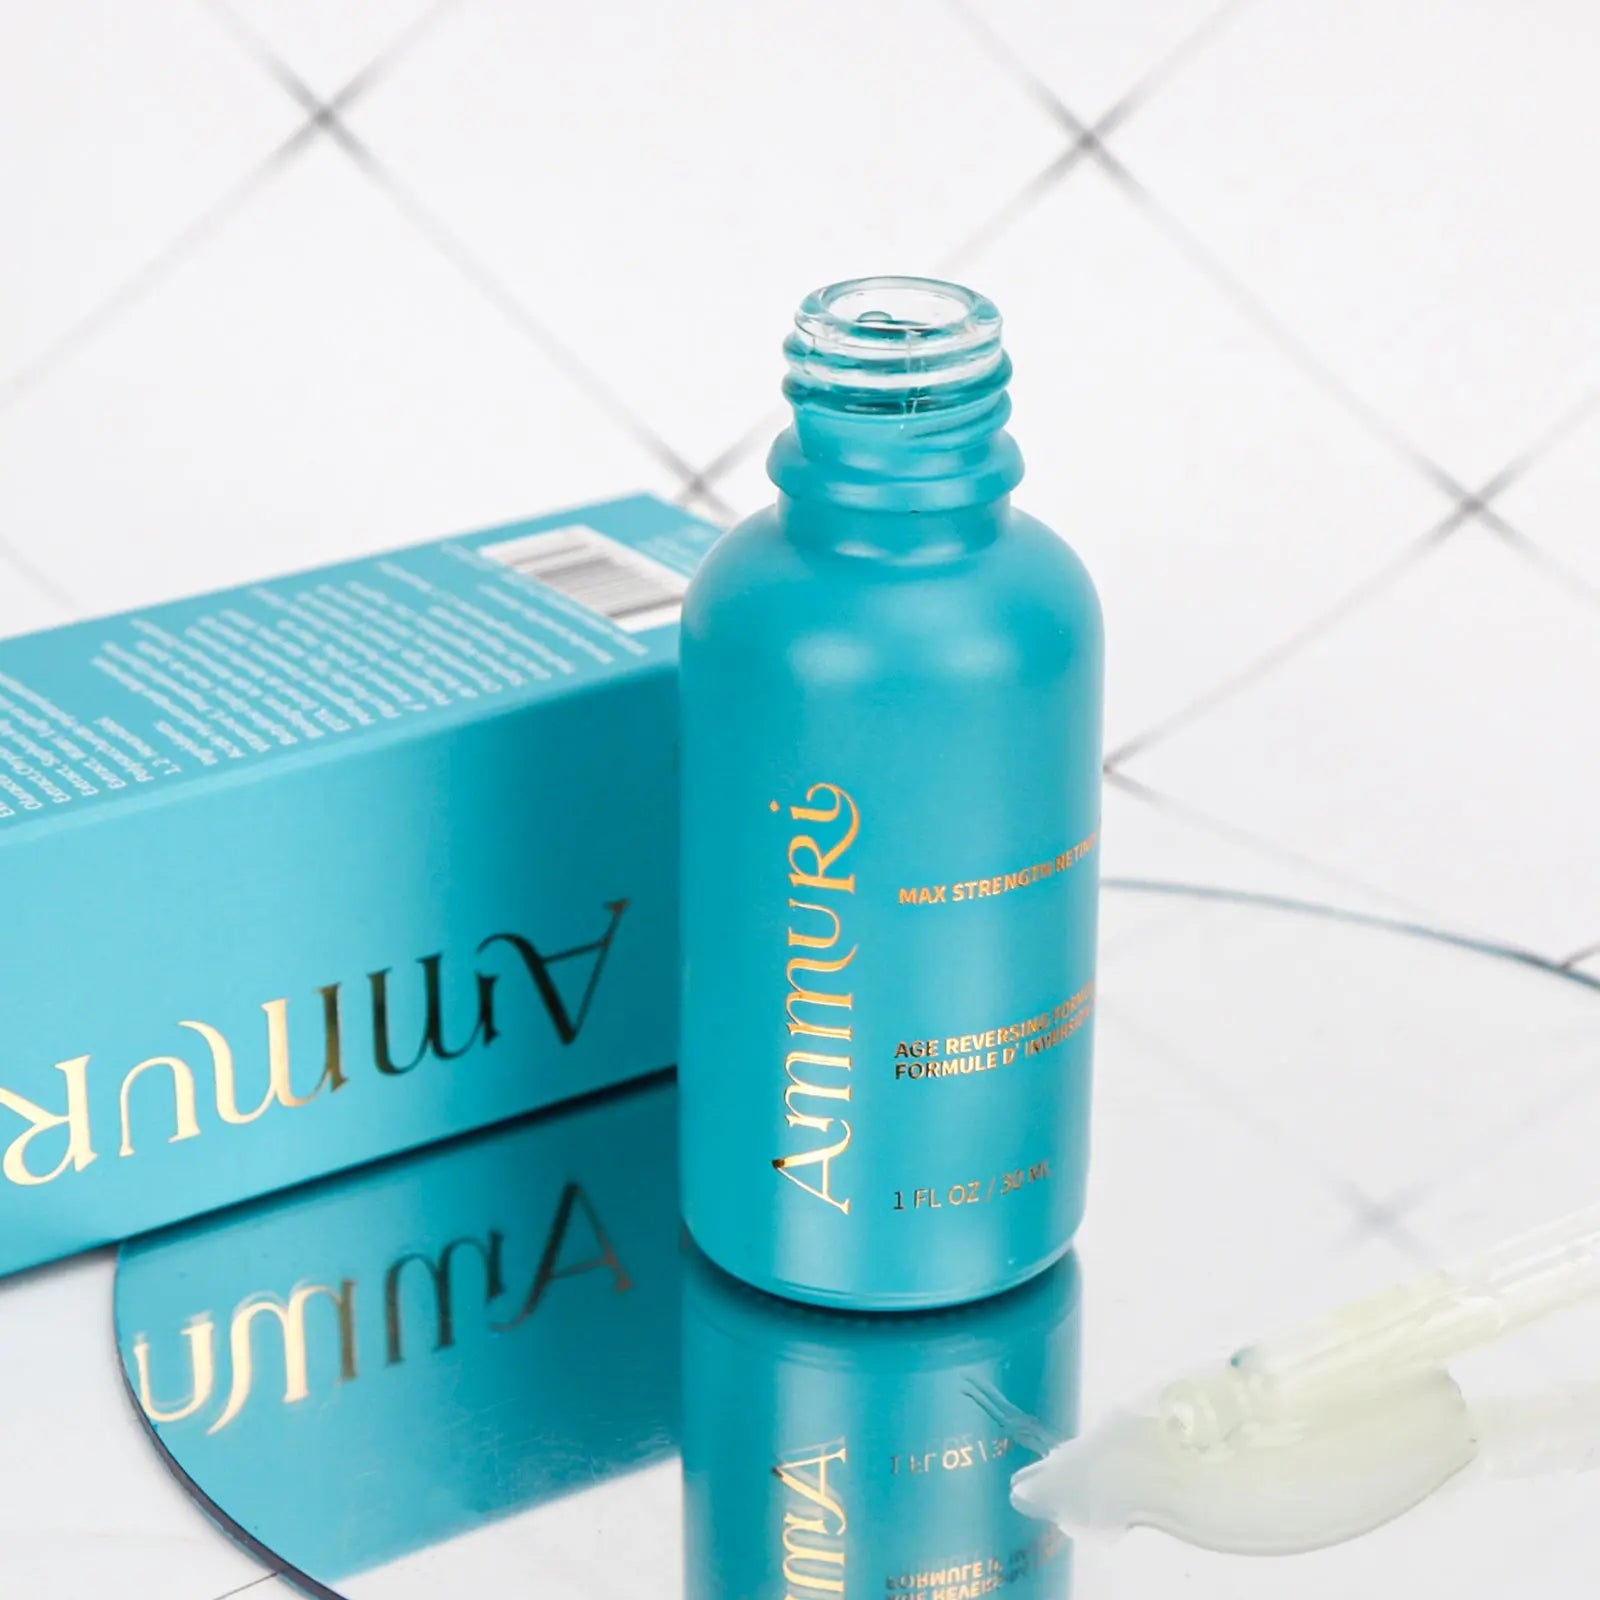 Ammuri Retinol Serum 5% (Max) Retinol Serum High Strength For Face Anti Aging Formula Face Serum For Women & Men Ammuri Skincare